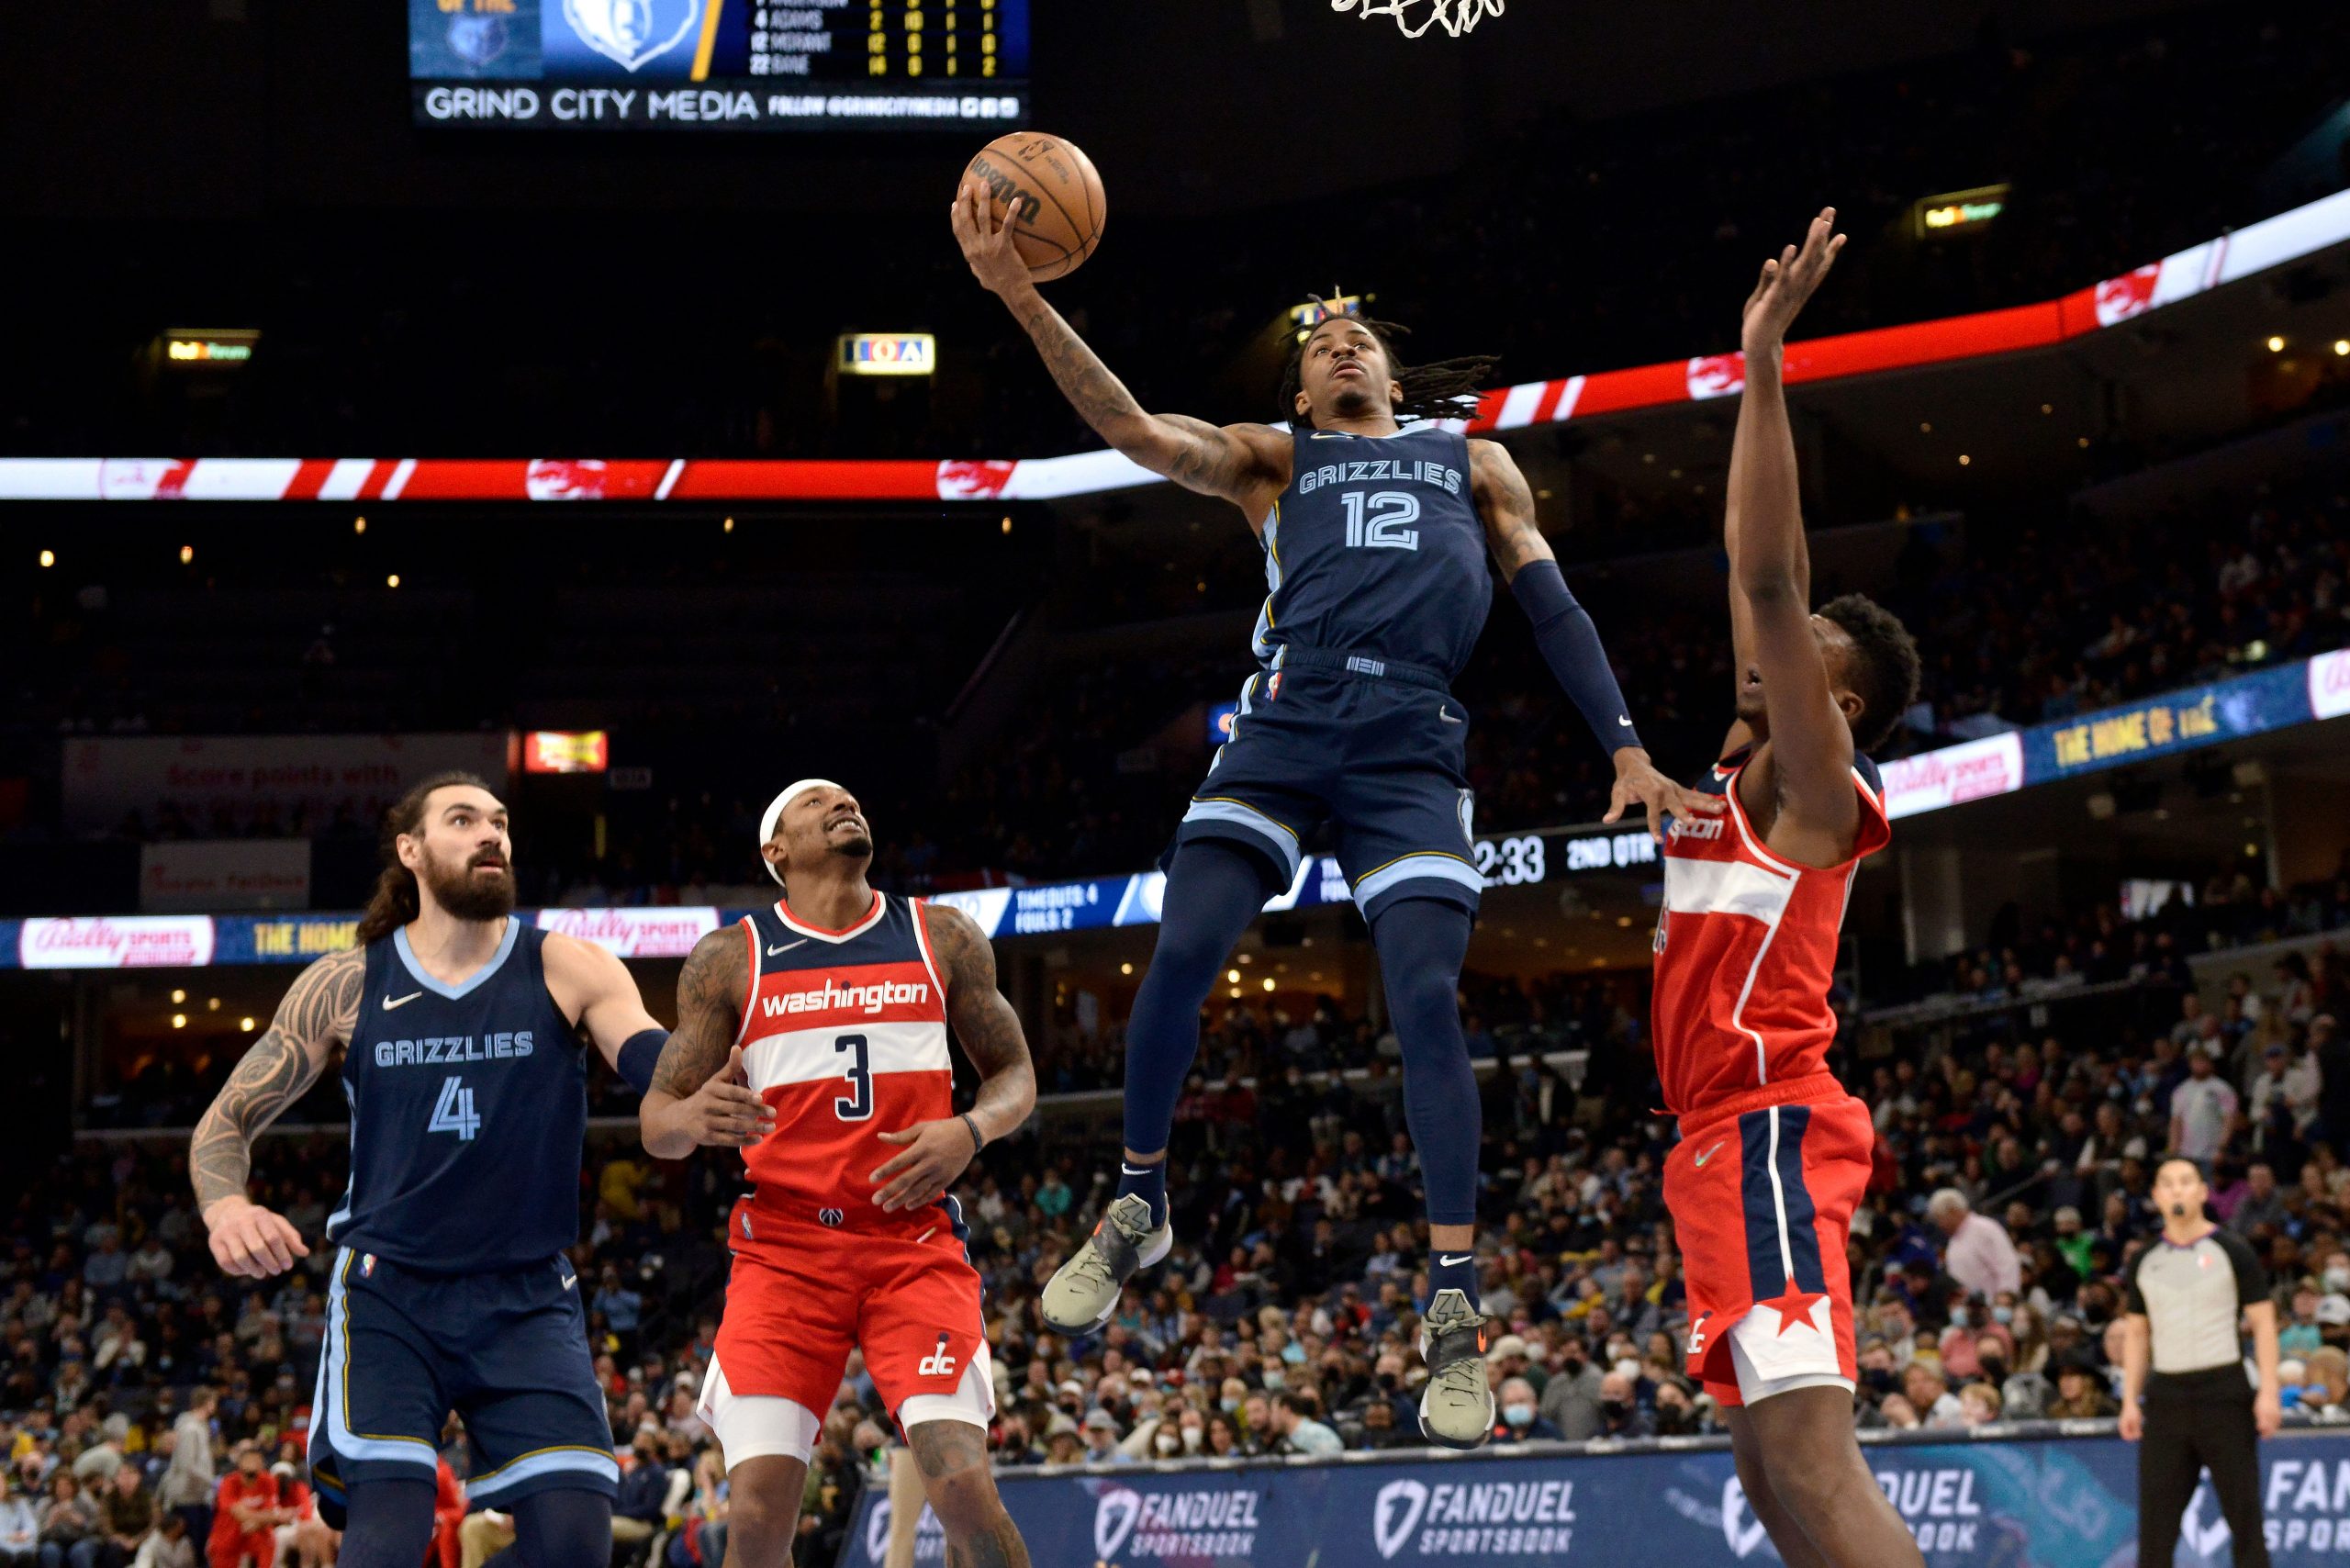 NBA: Ja Morant scores 34 points, Memphis Grizzlies beat Washington Wizards 115-95